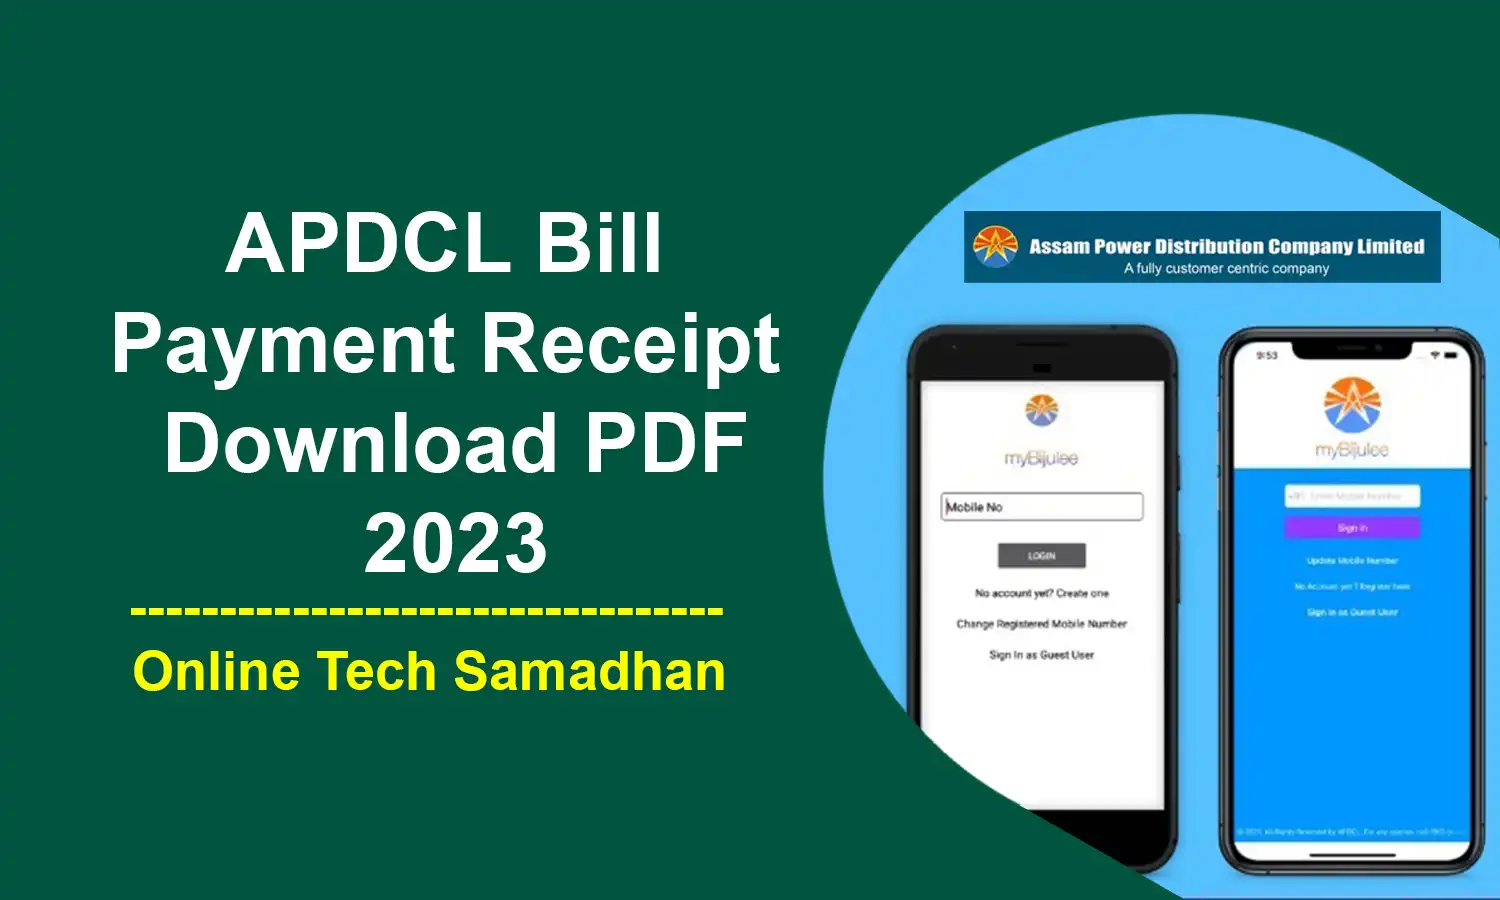 APDCL Bill Payment Receipt Download PDF